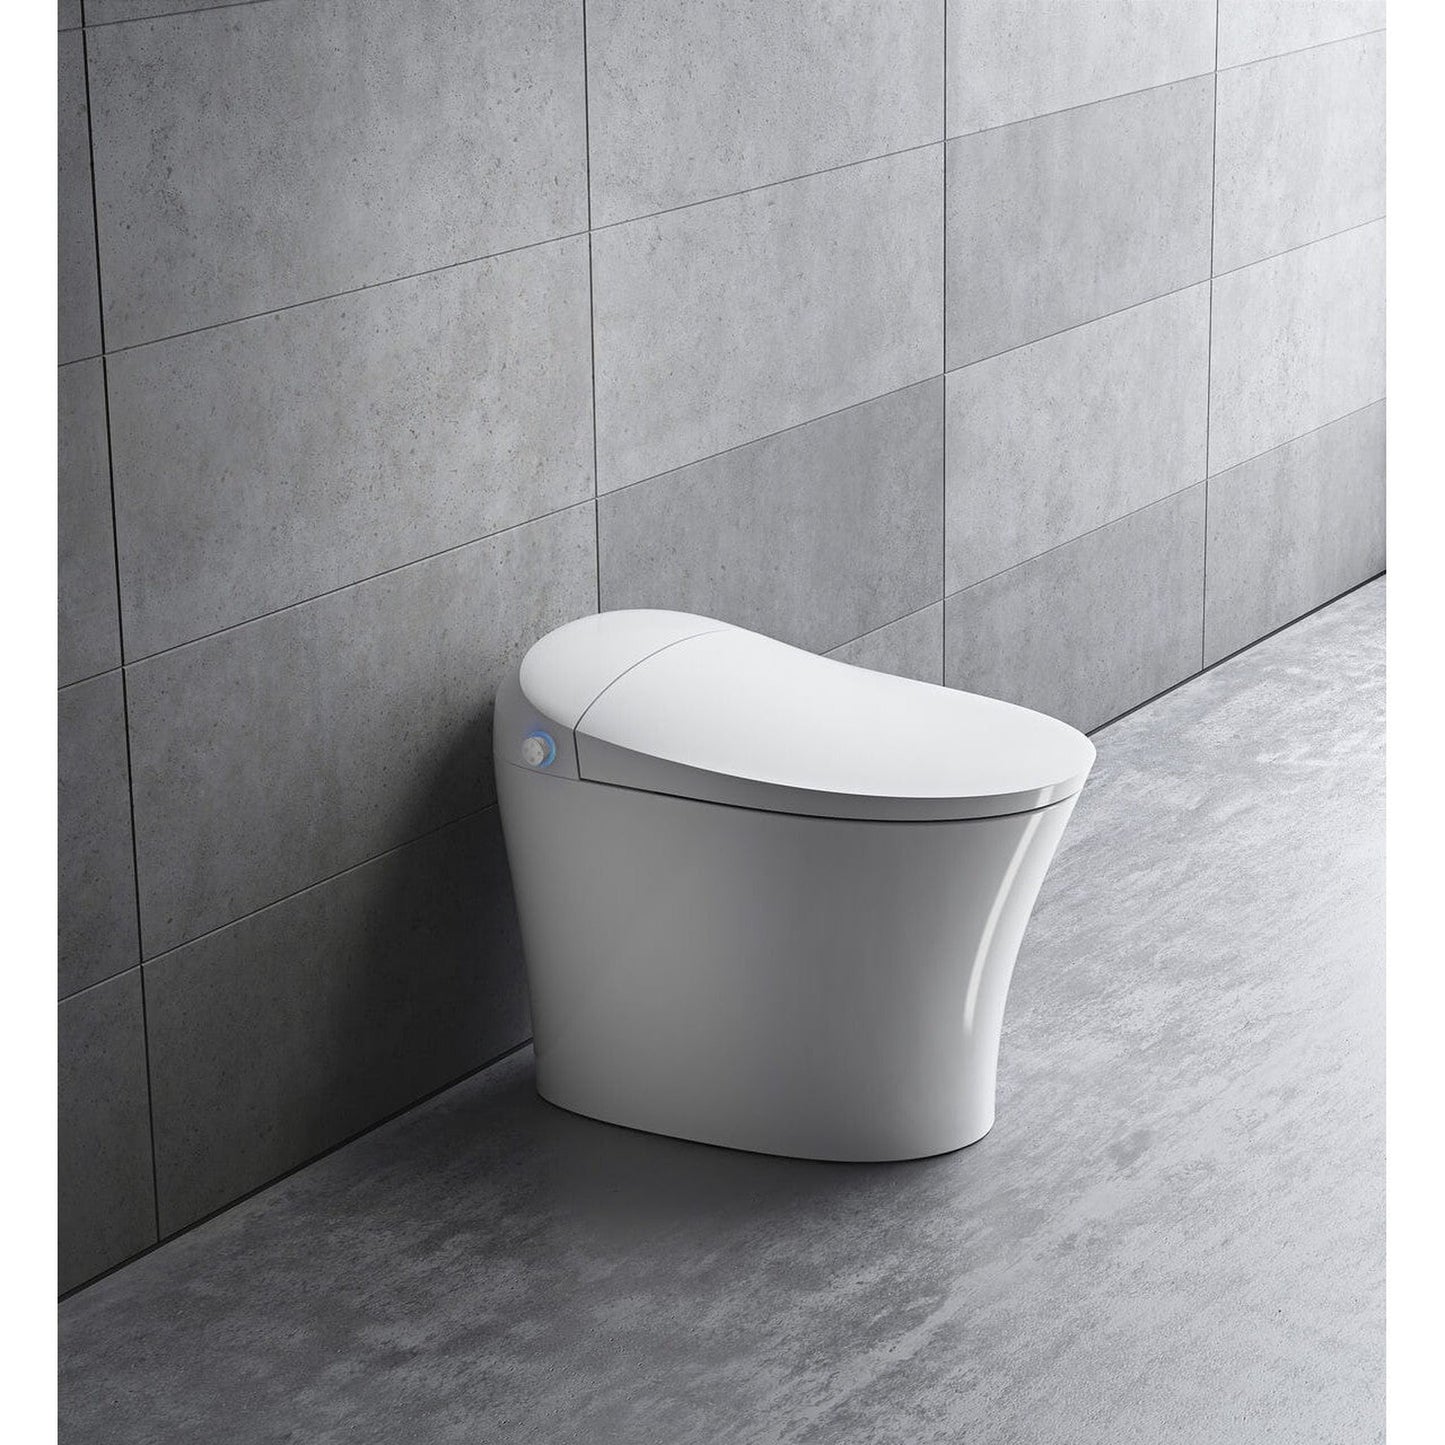 Castello USA New York White Full Function Smart Toilet With Adjustable Bidet